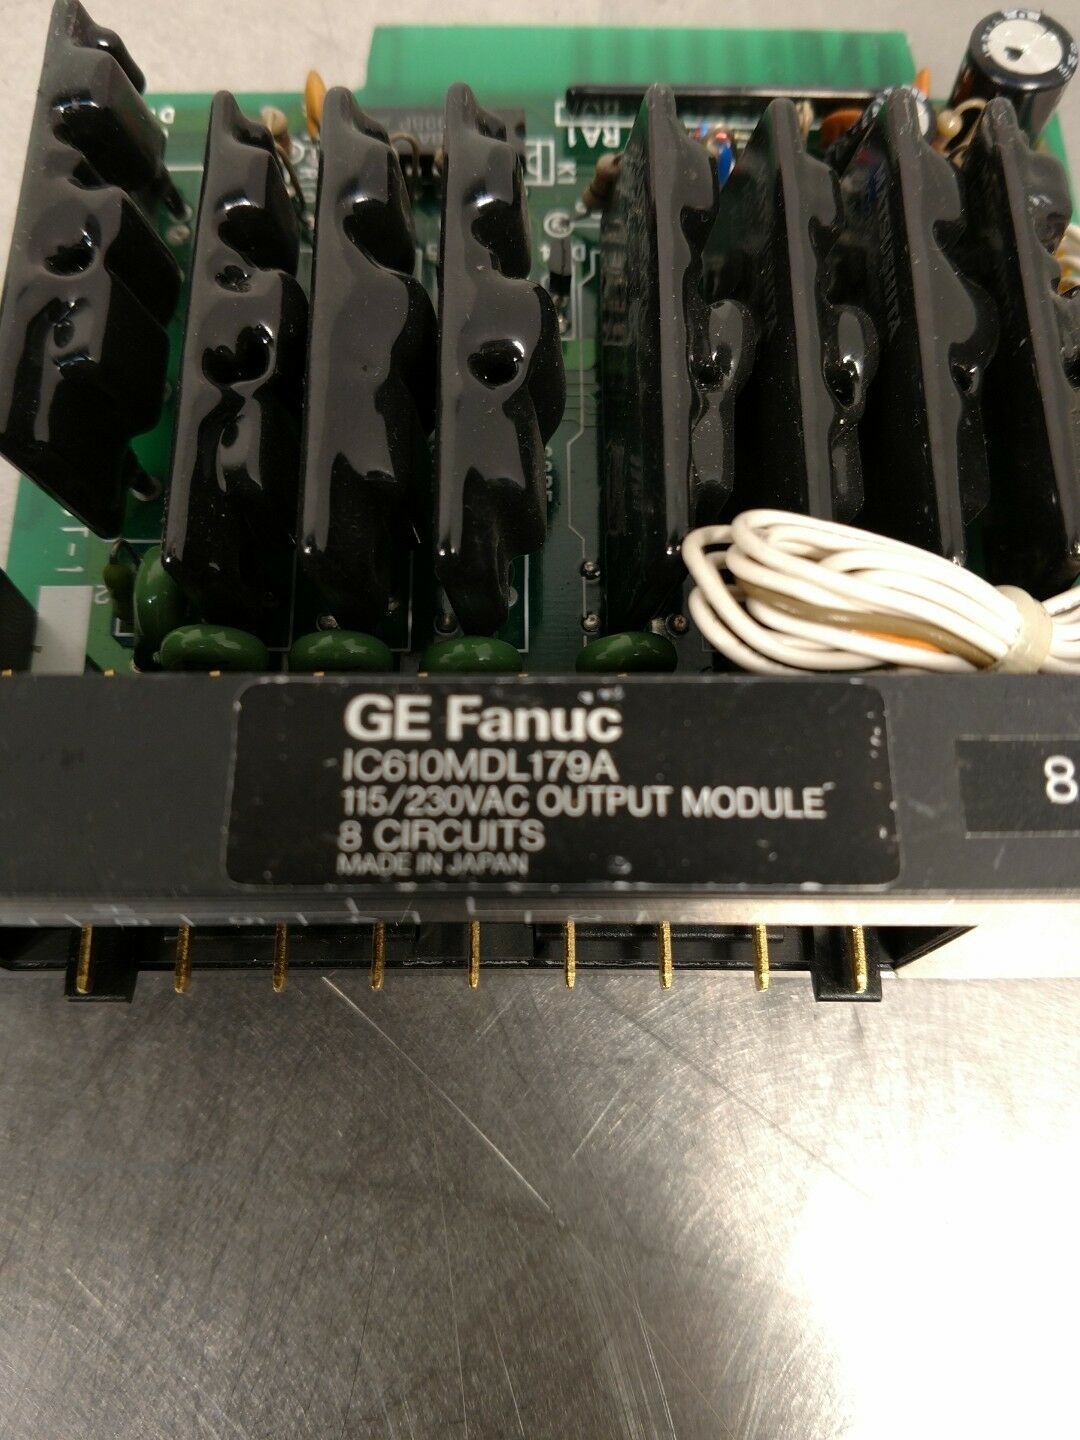 GE FANUC IC610MDL179A 115/230VAC Output Module 8-Circuits 3F